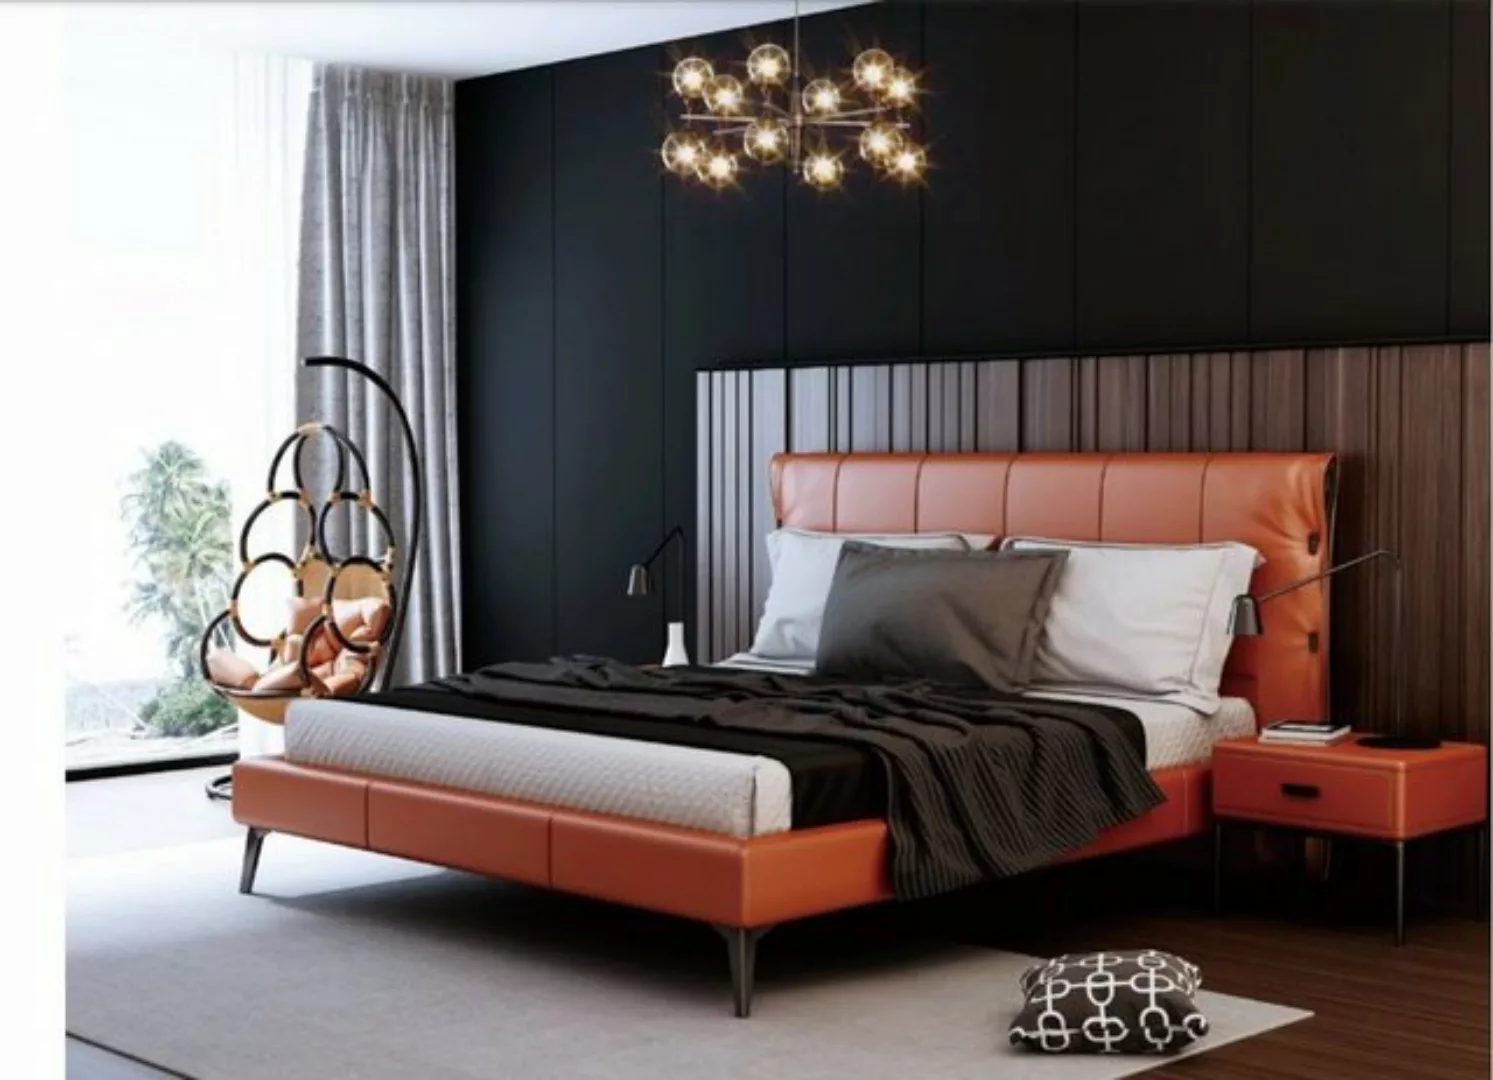 JVmoebel Bett, Doppelbett Bett Ehebett Design Luxus Luxur Polsterbett Desig günstig online kaufen